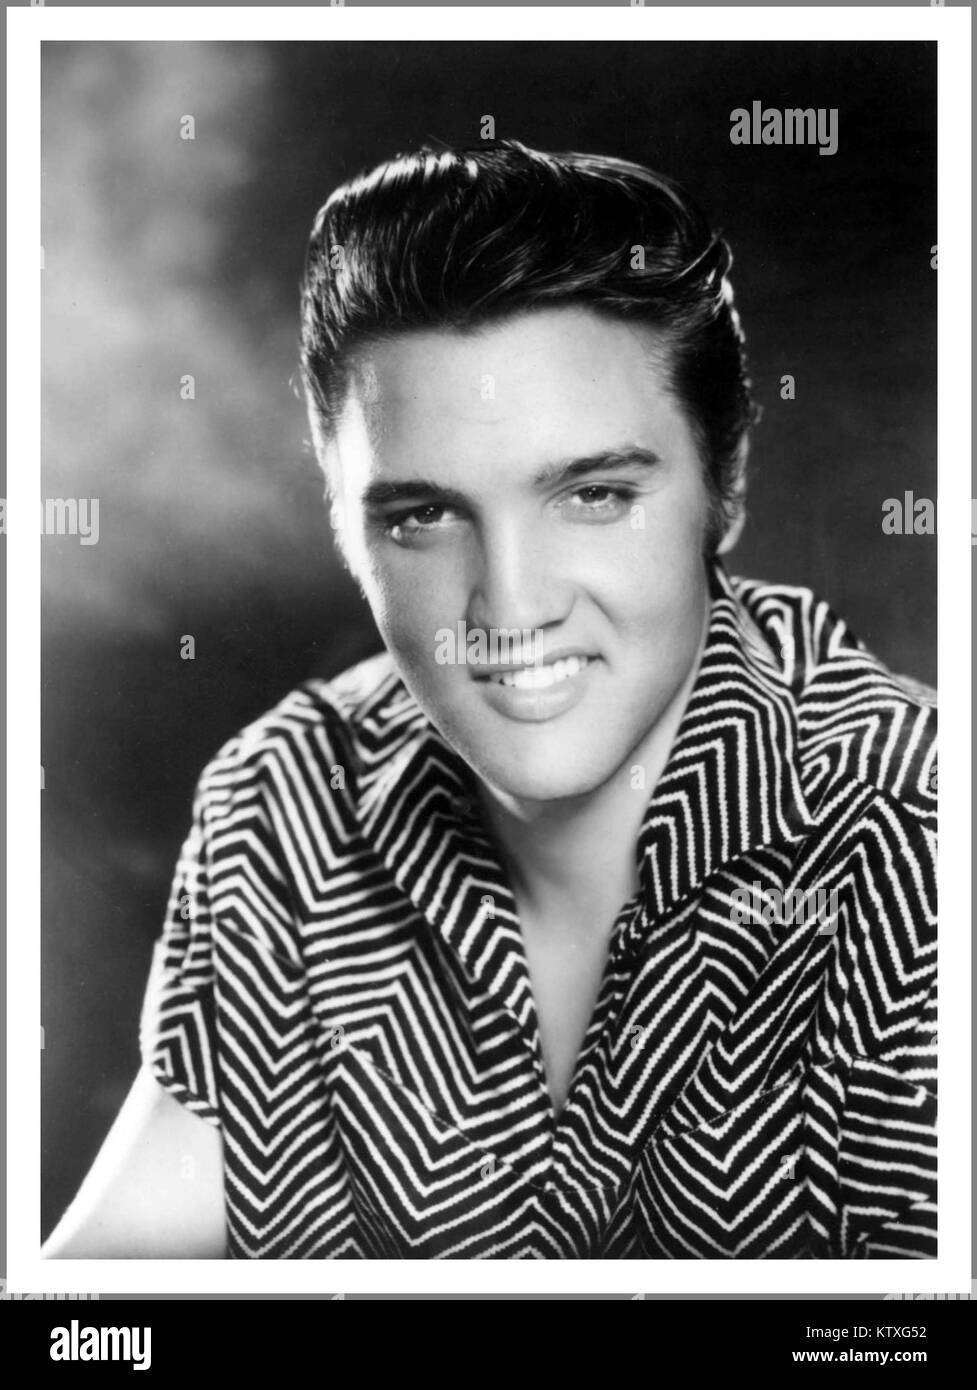 ELVIS PRESLEY '50's Vintage 1950's Hollywood studio stampa ritratto promozionale ancora di Elvis Presley Foto Stock